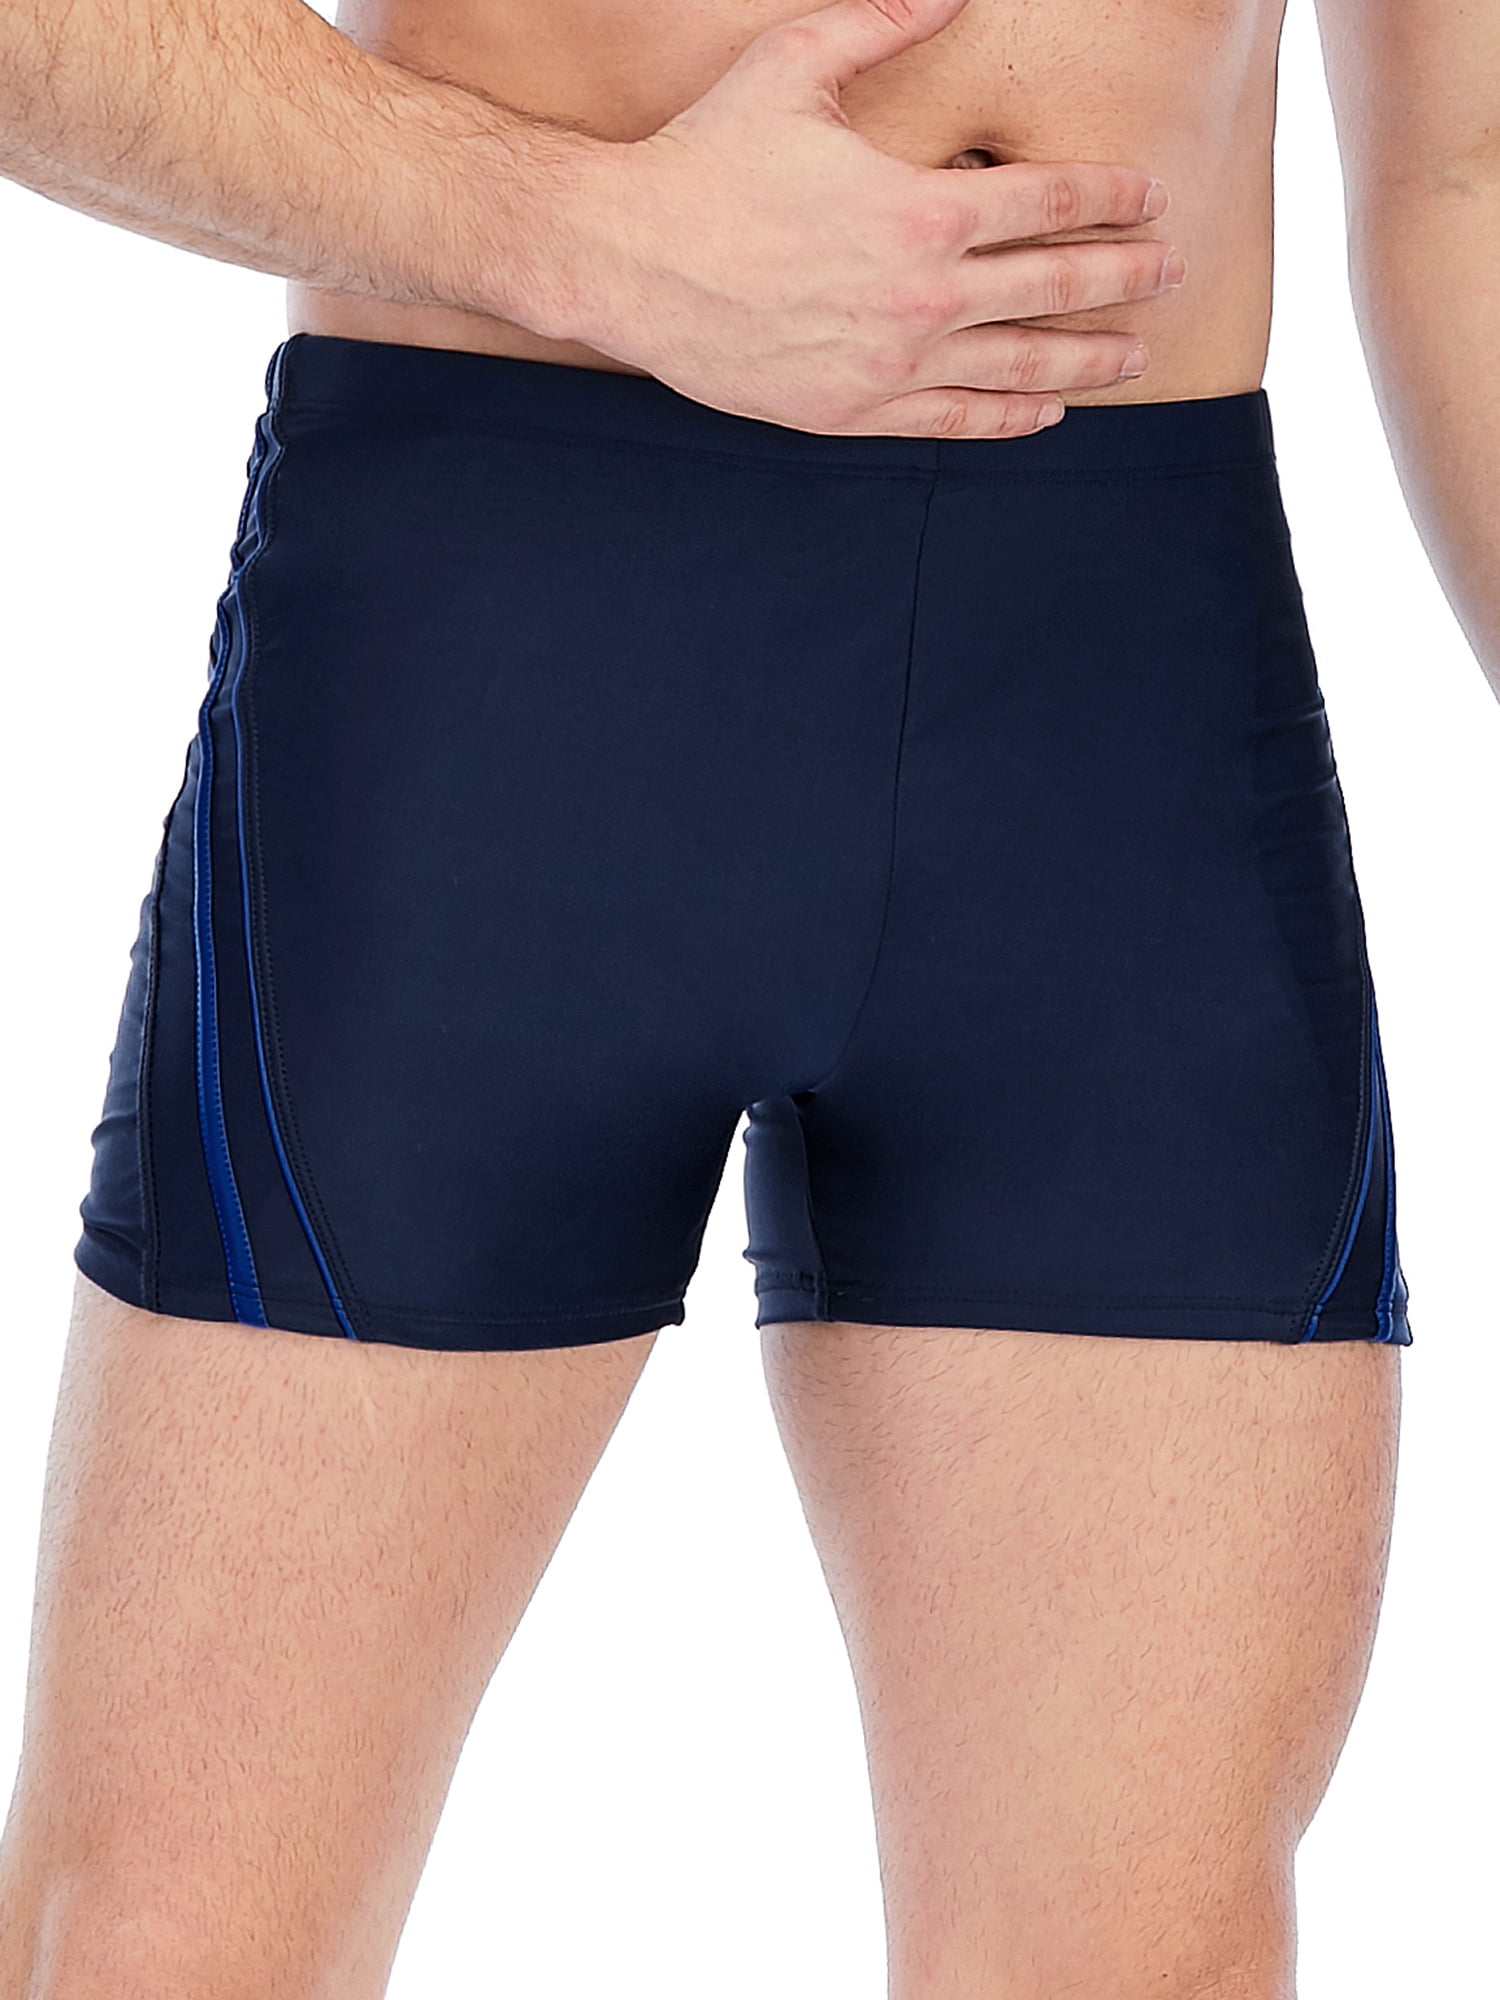 Hot Sexy Men's Swimwear Boxers Swimming Trunks Sport Shorts Swim Beach Pants  LC | eBay